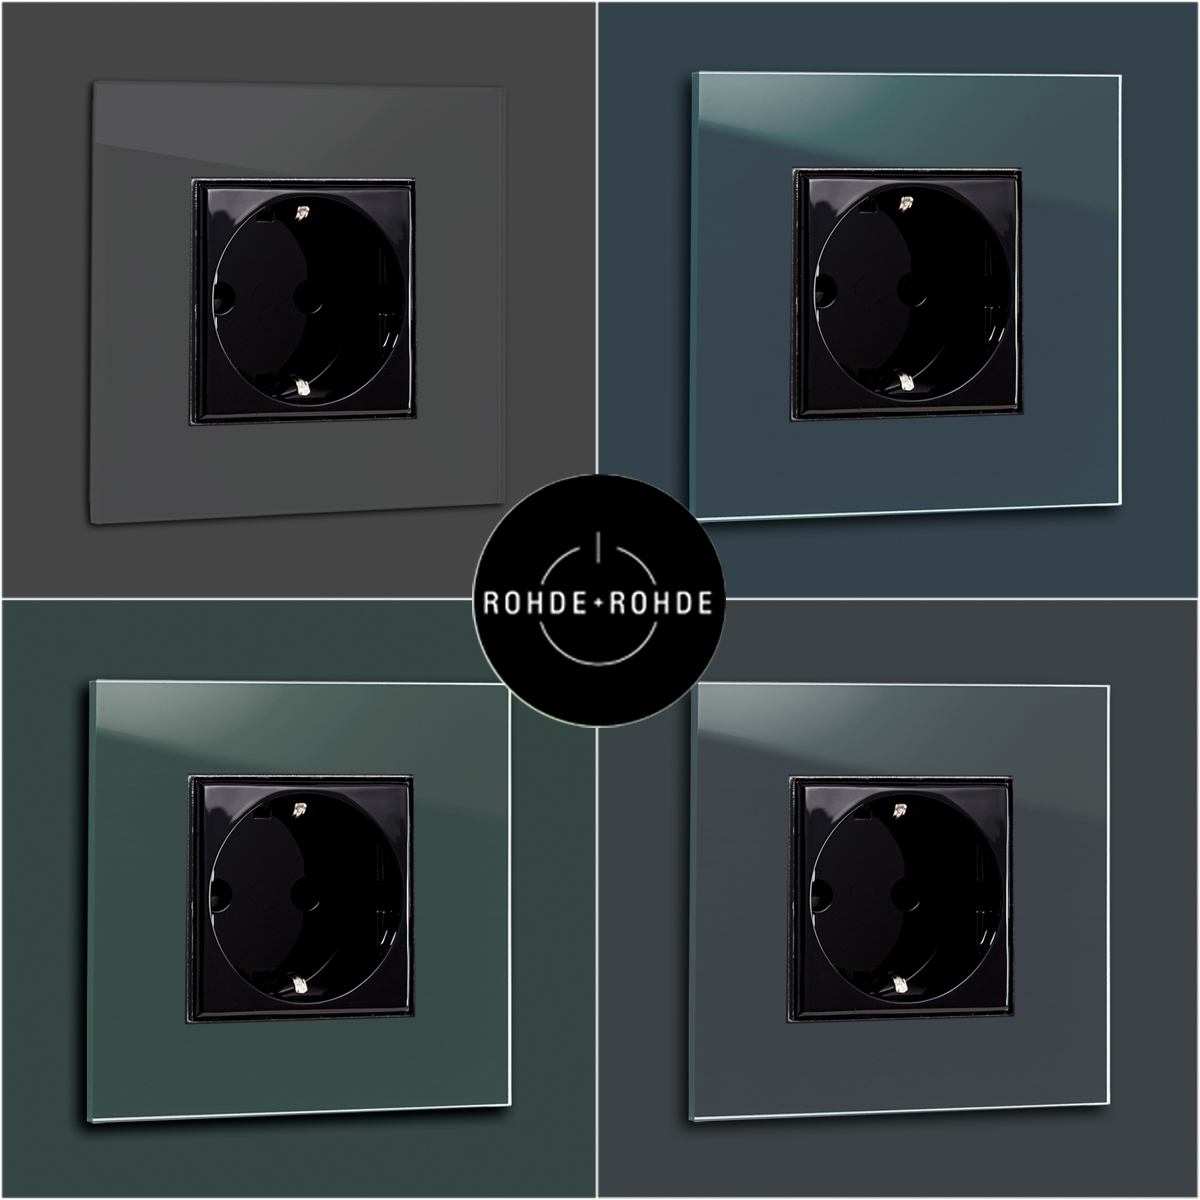 Socket outlet in Little Greene colour of choice. 1 black socket outlet insert. MAXIM